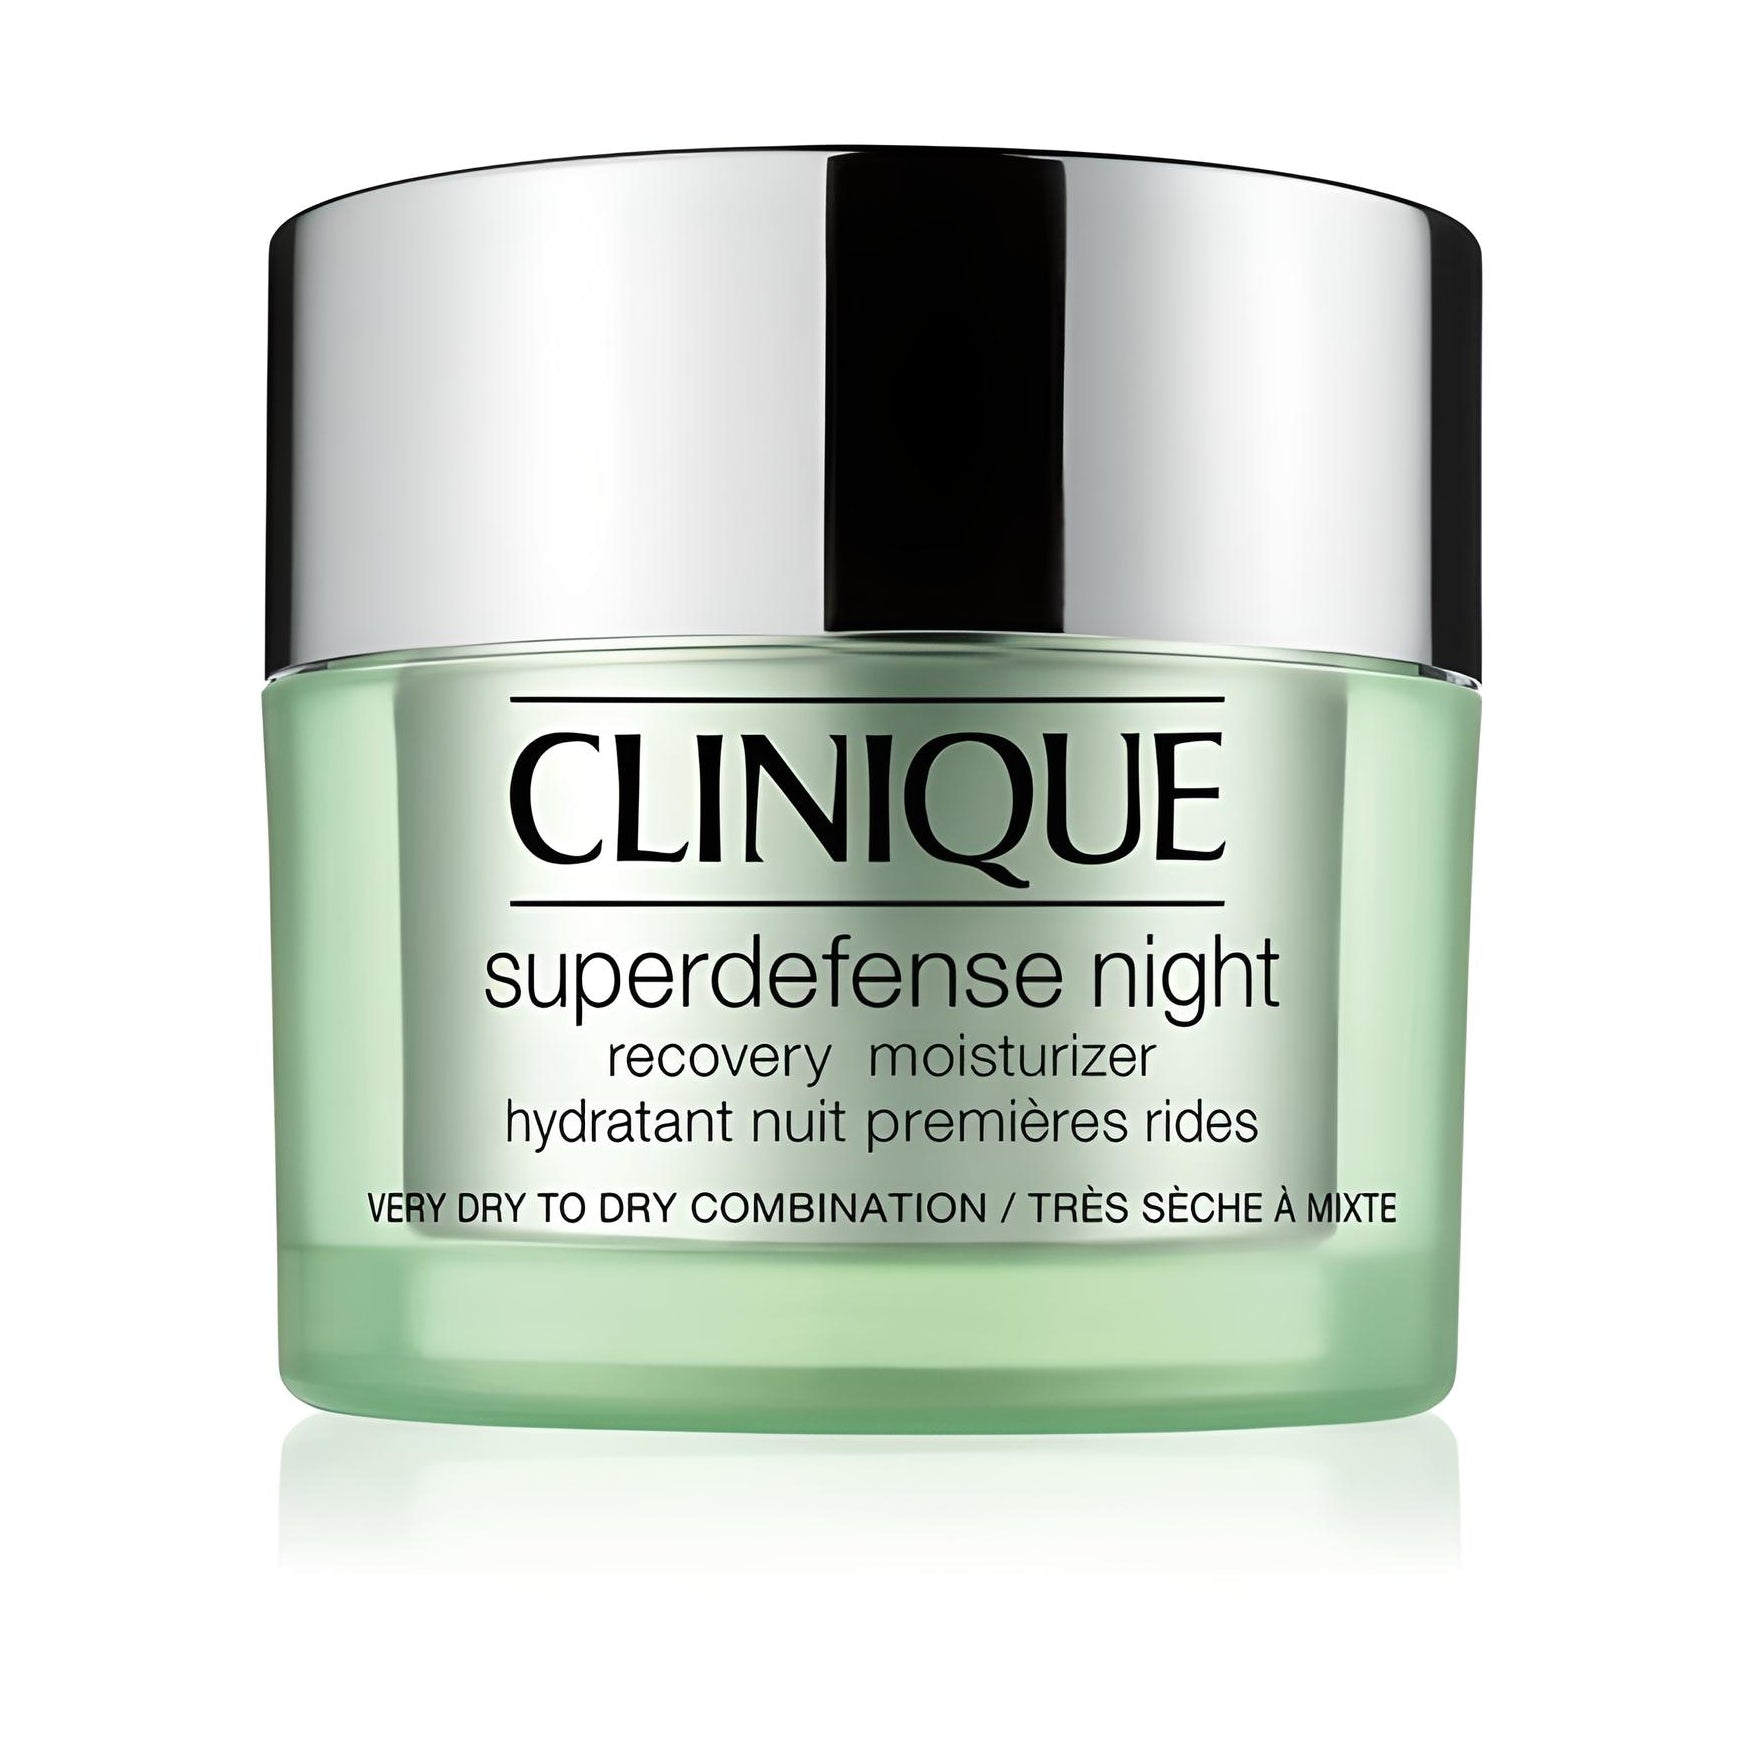 SUPERDEFENSE NIGHT recovery moisturizer I/II Gesichtspflege CLINIQUE   